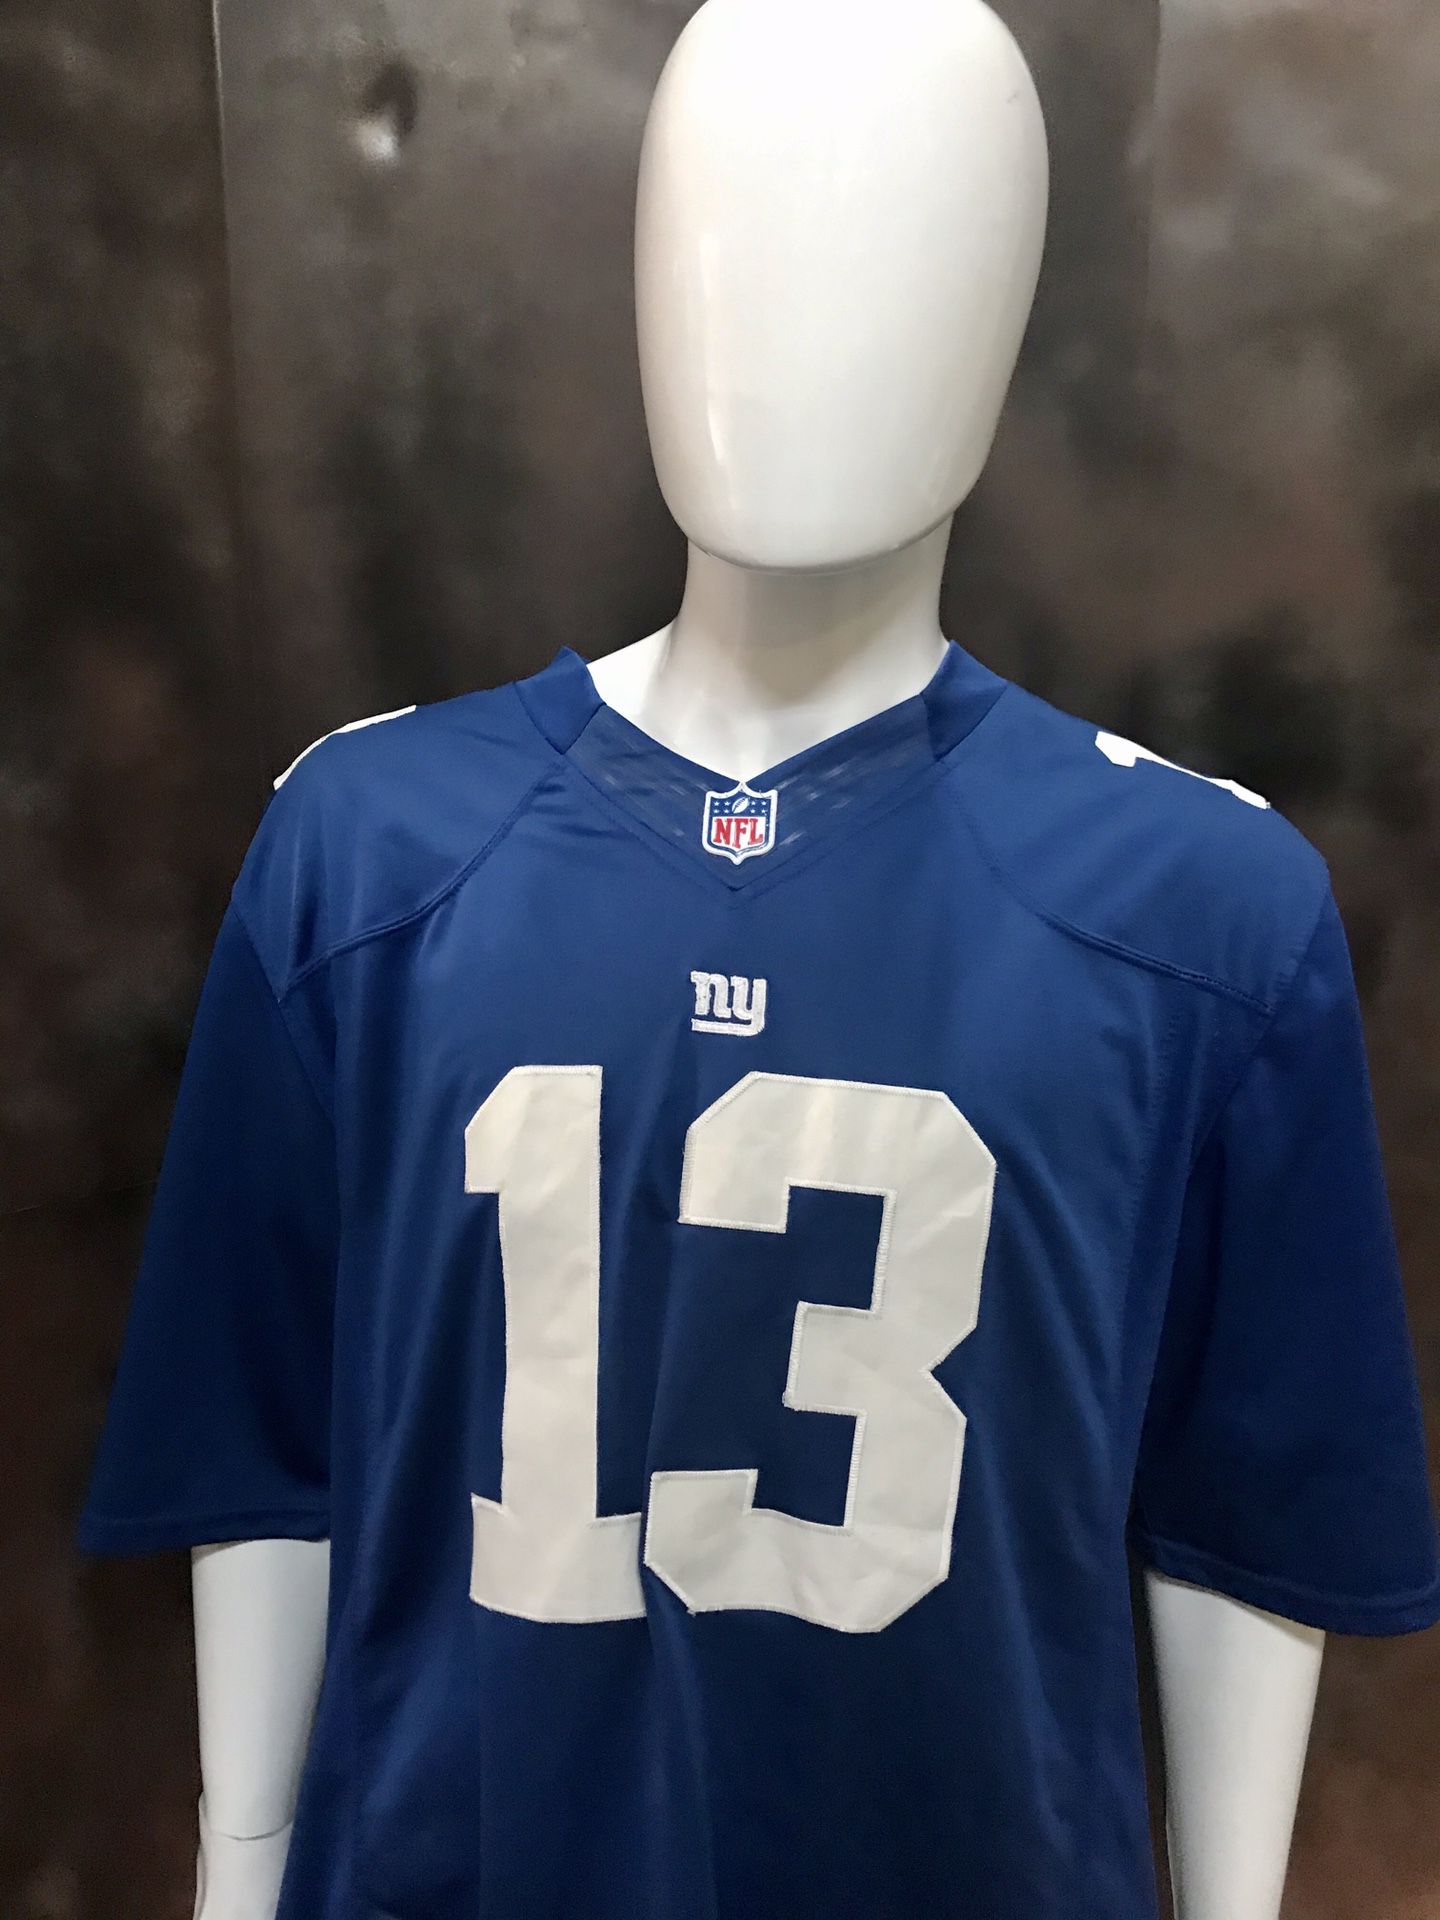 NFL Giants Beckham Jersey size L